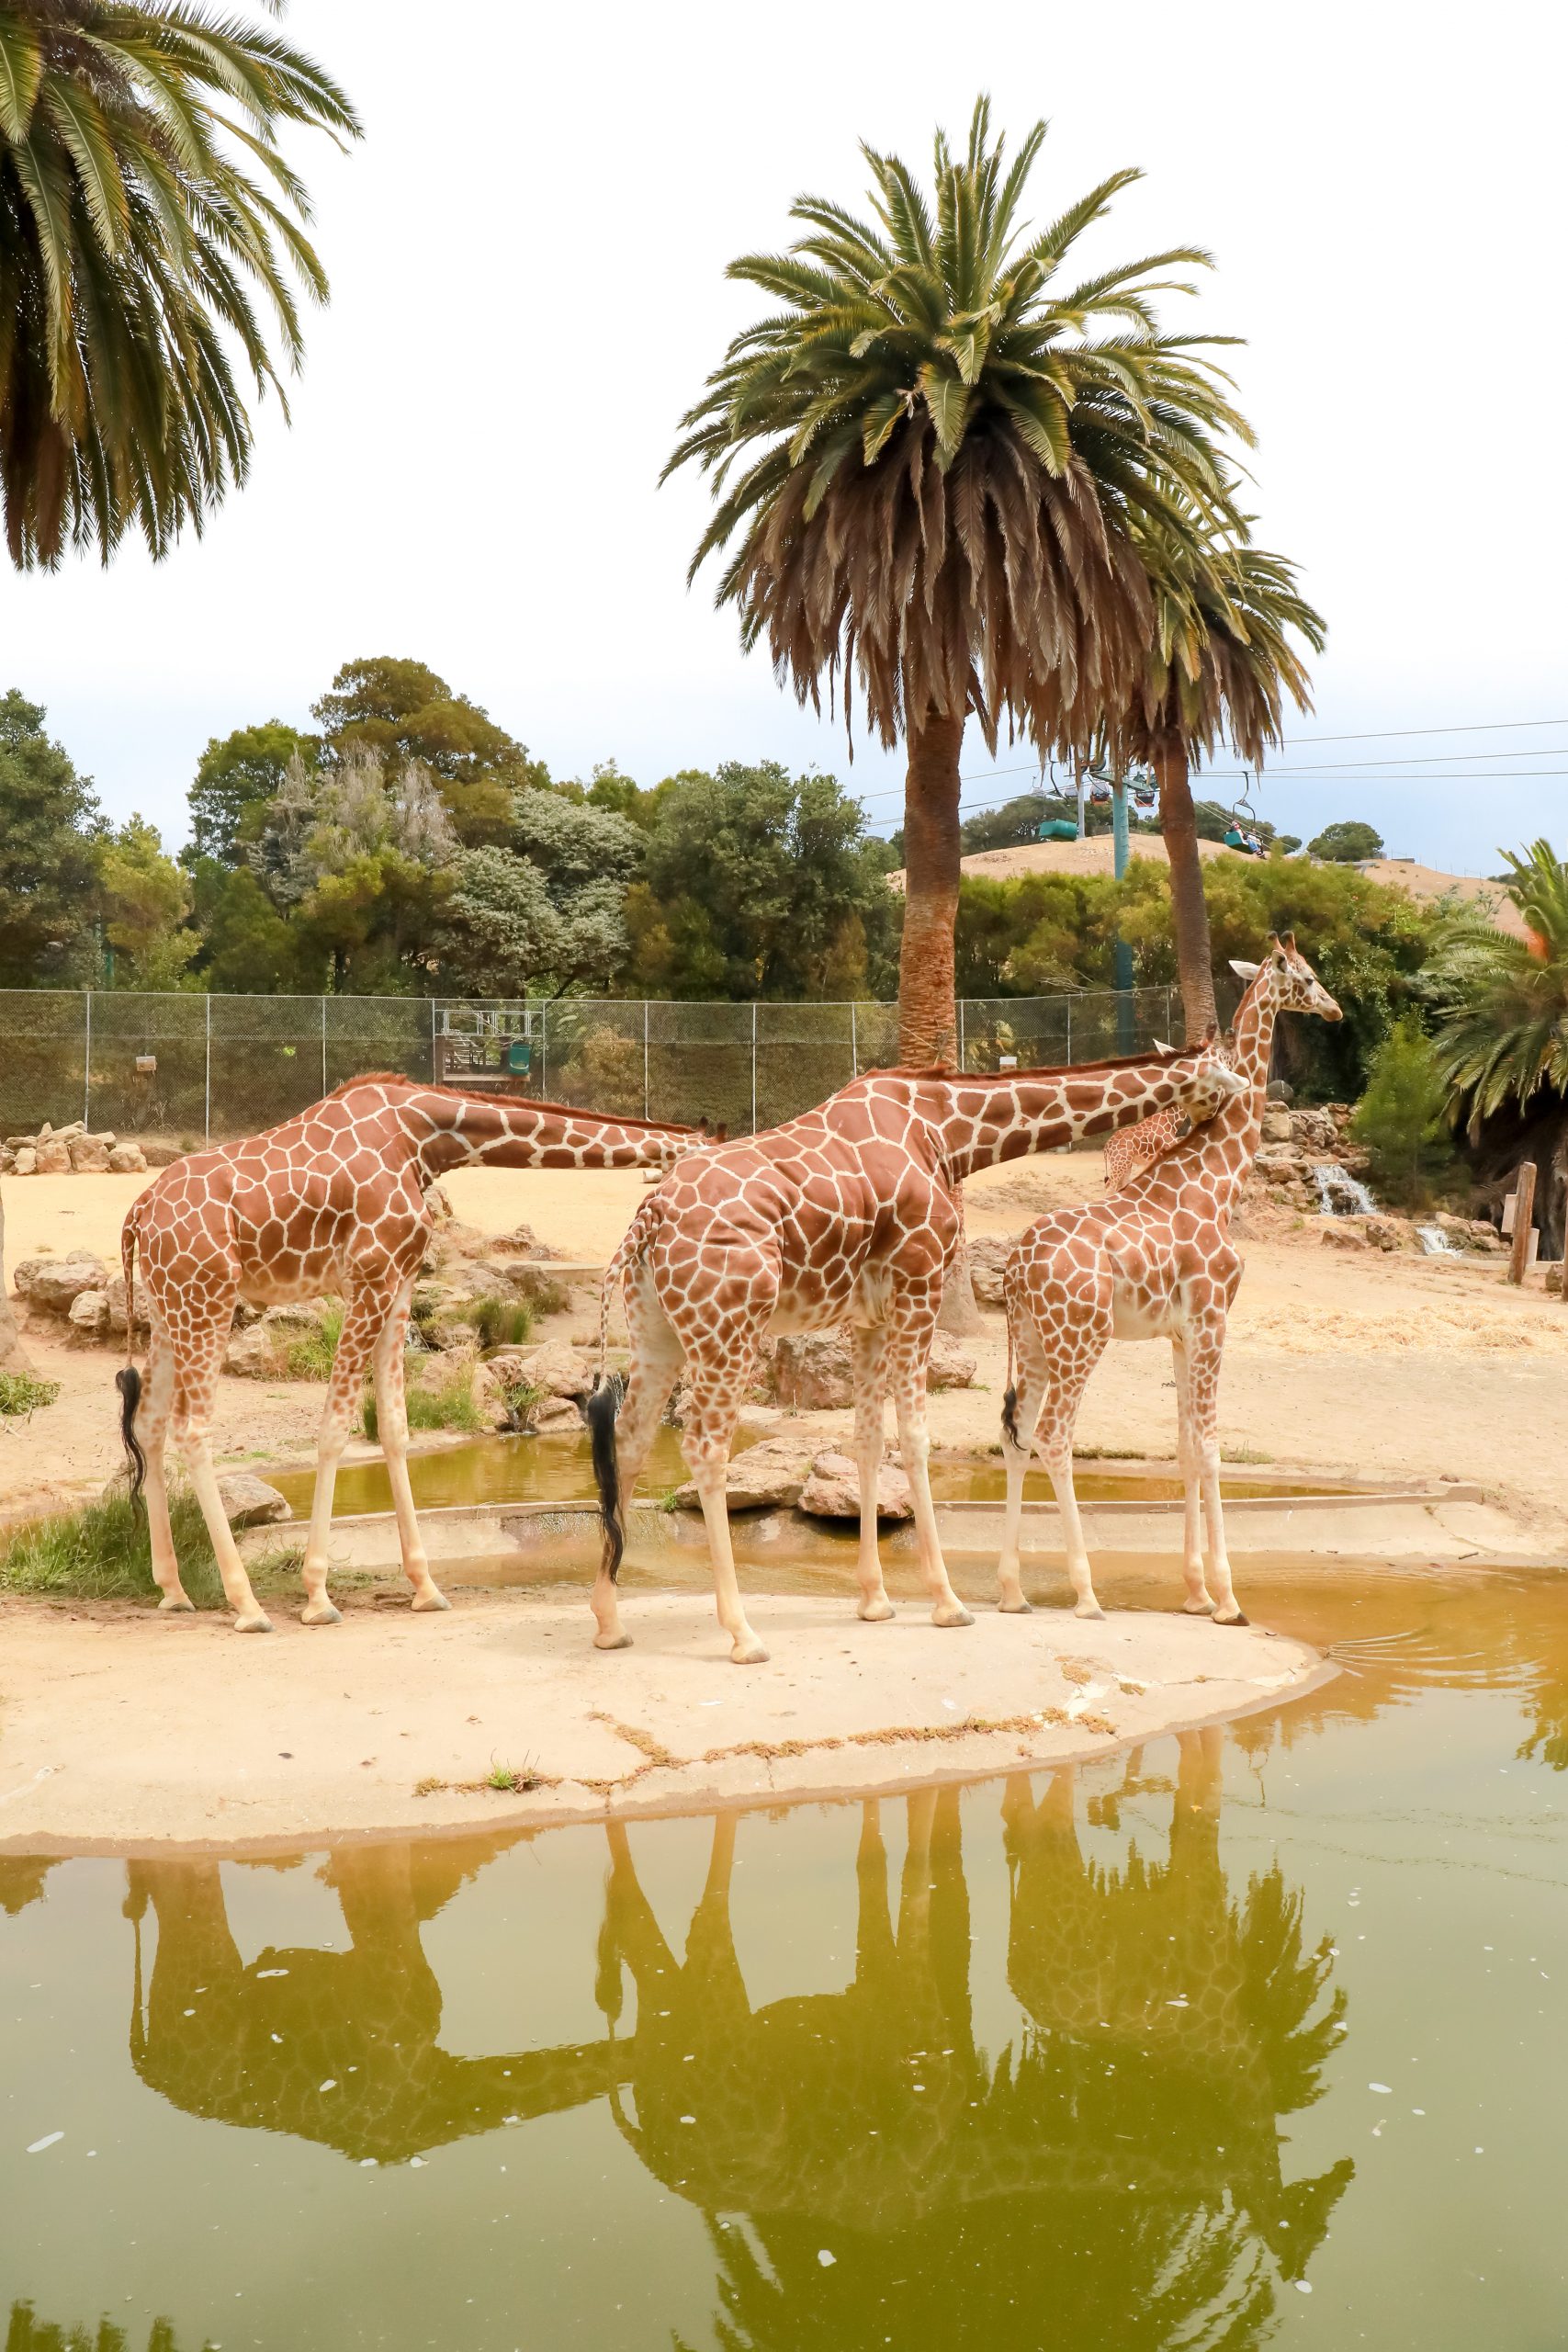 Oakland zoo